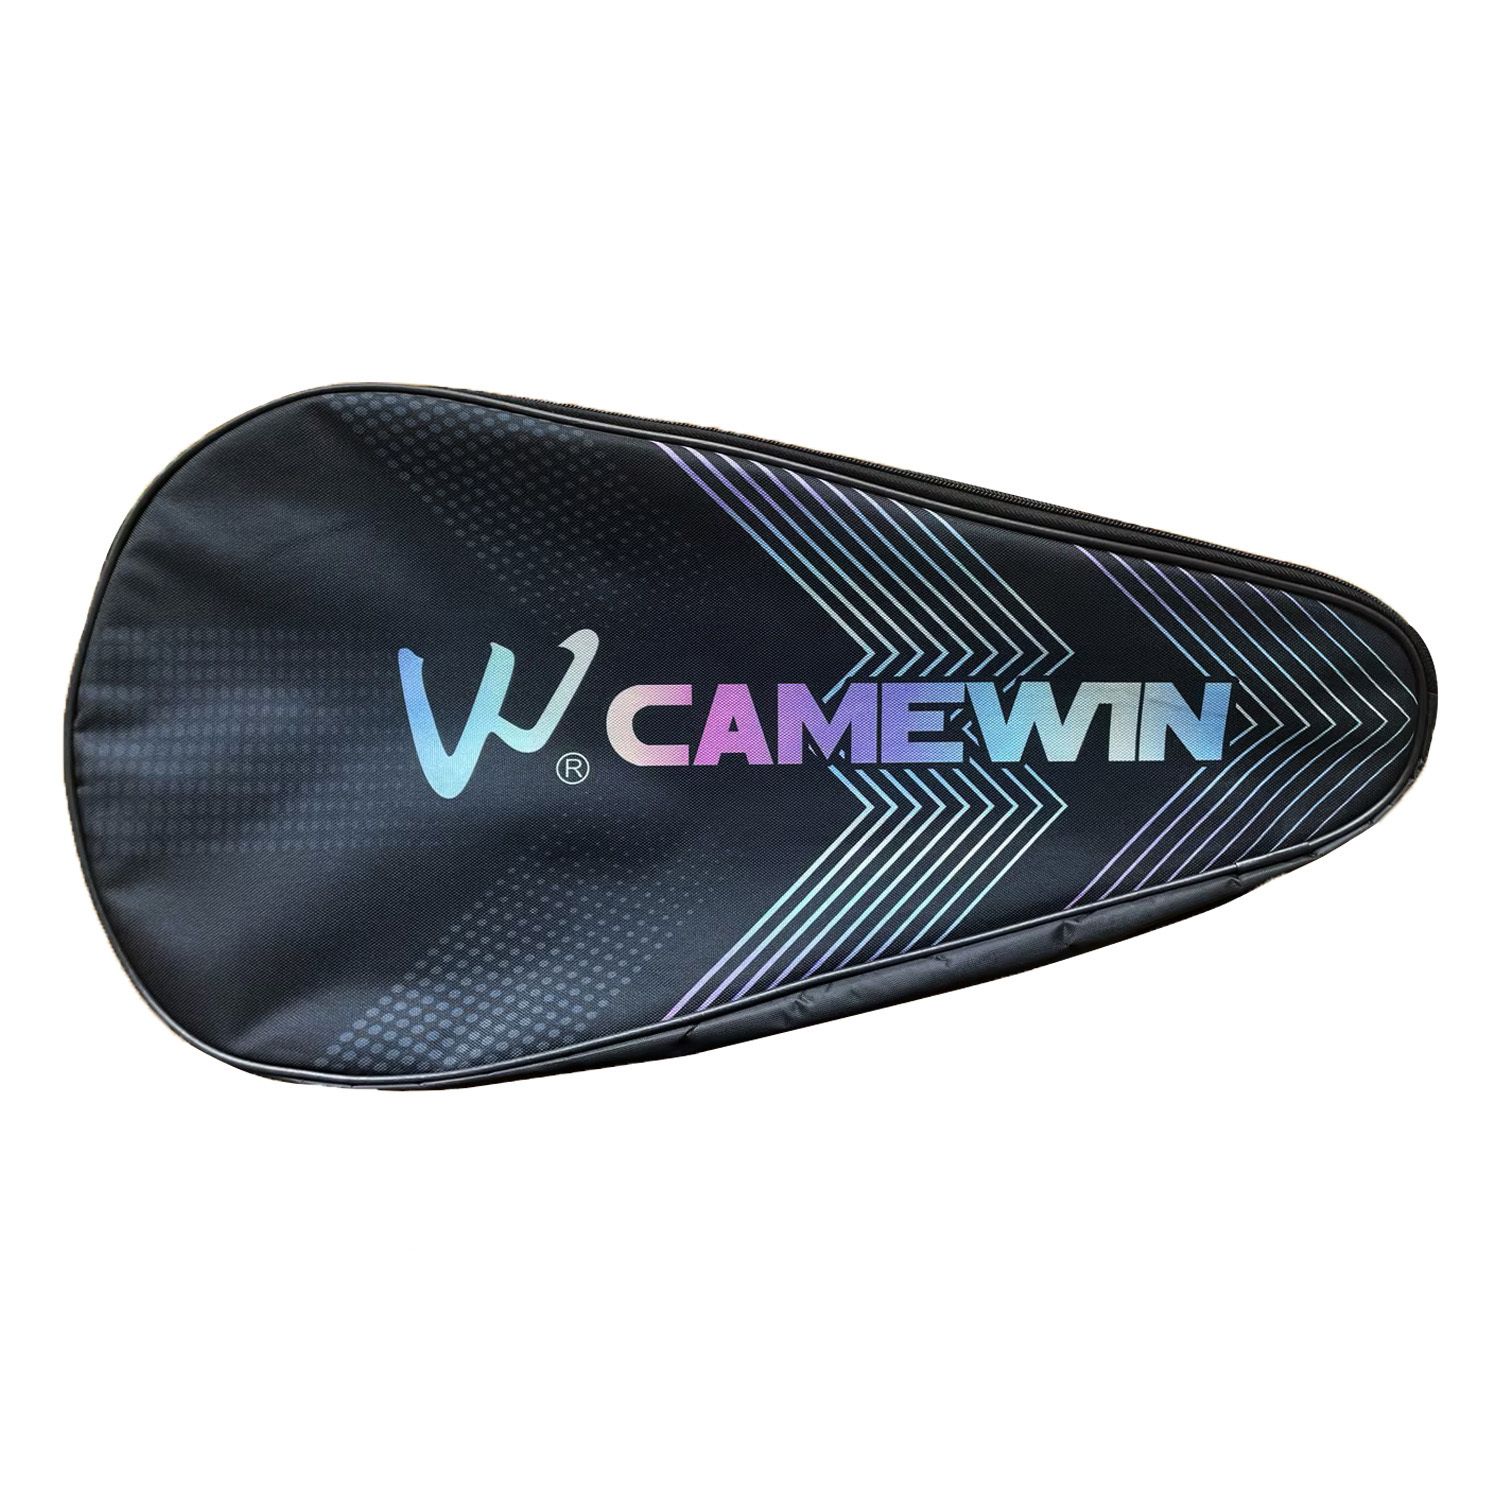 Camewin Cover Bag